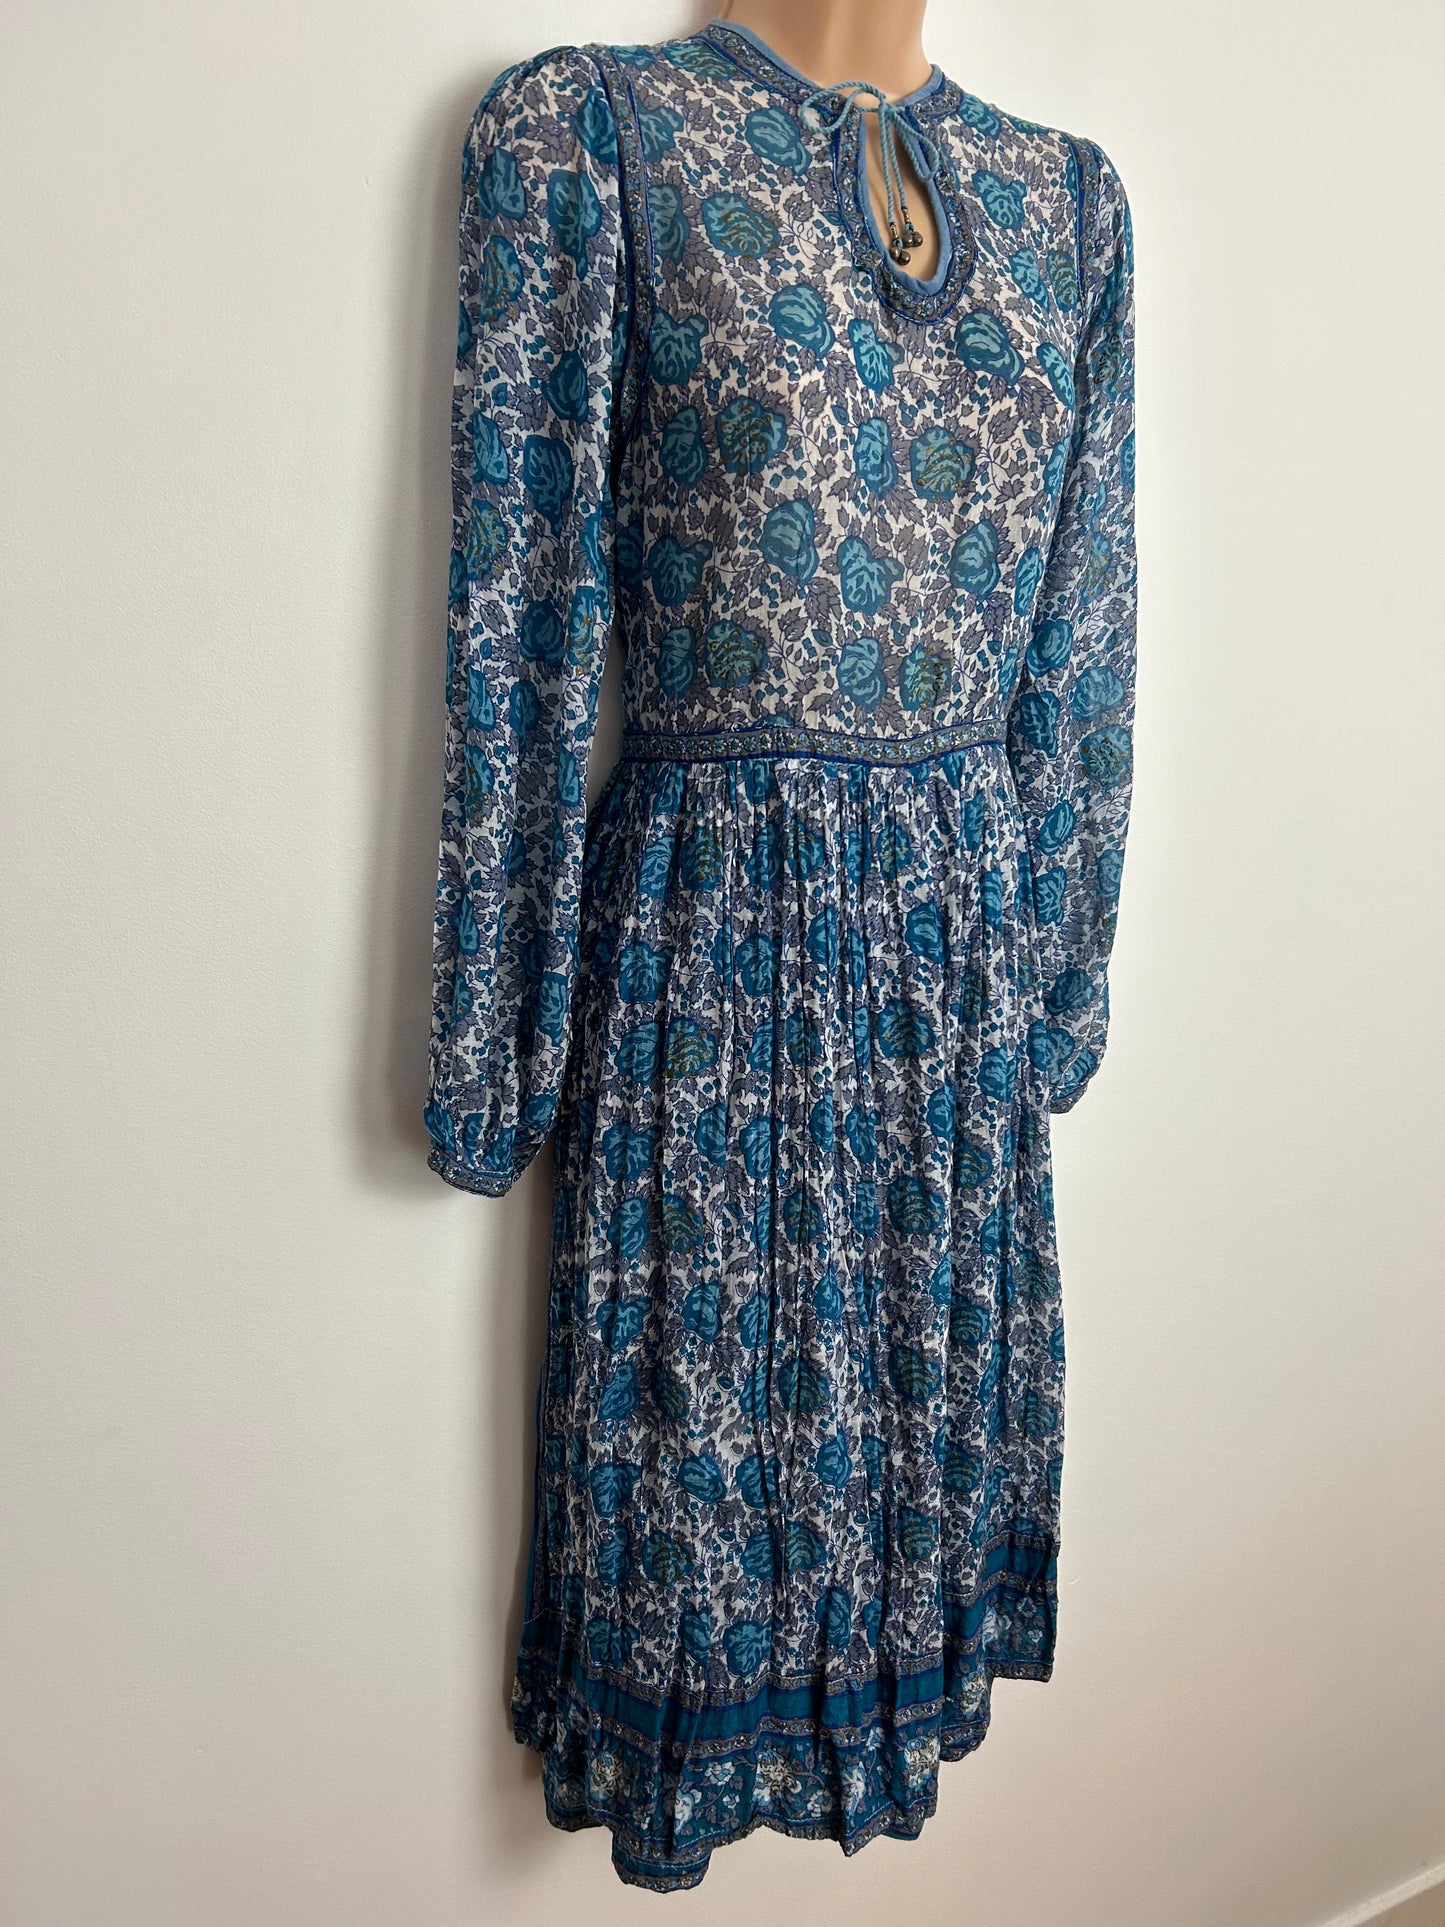 Vintage 1970s Size Medium (UK 12) Blue Teal & White Floral Print Gold Stamped Indian Cotton Gauze Pleated Smock Dress